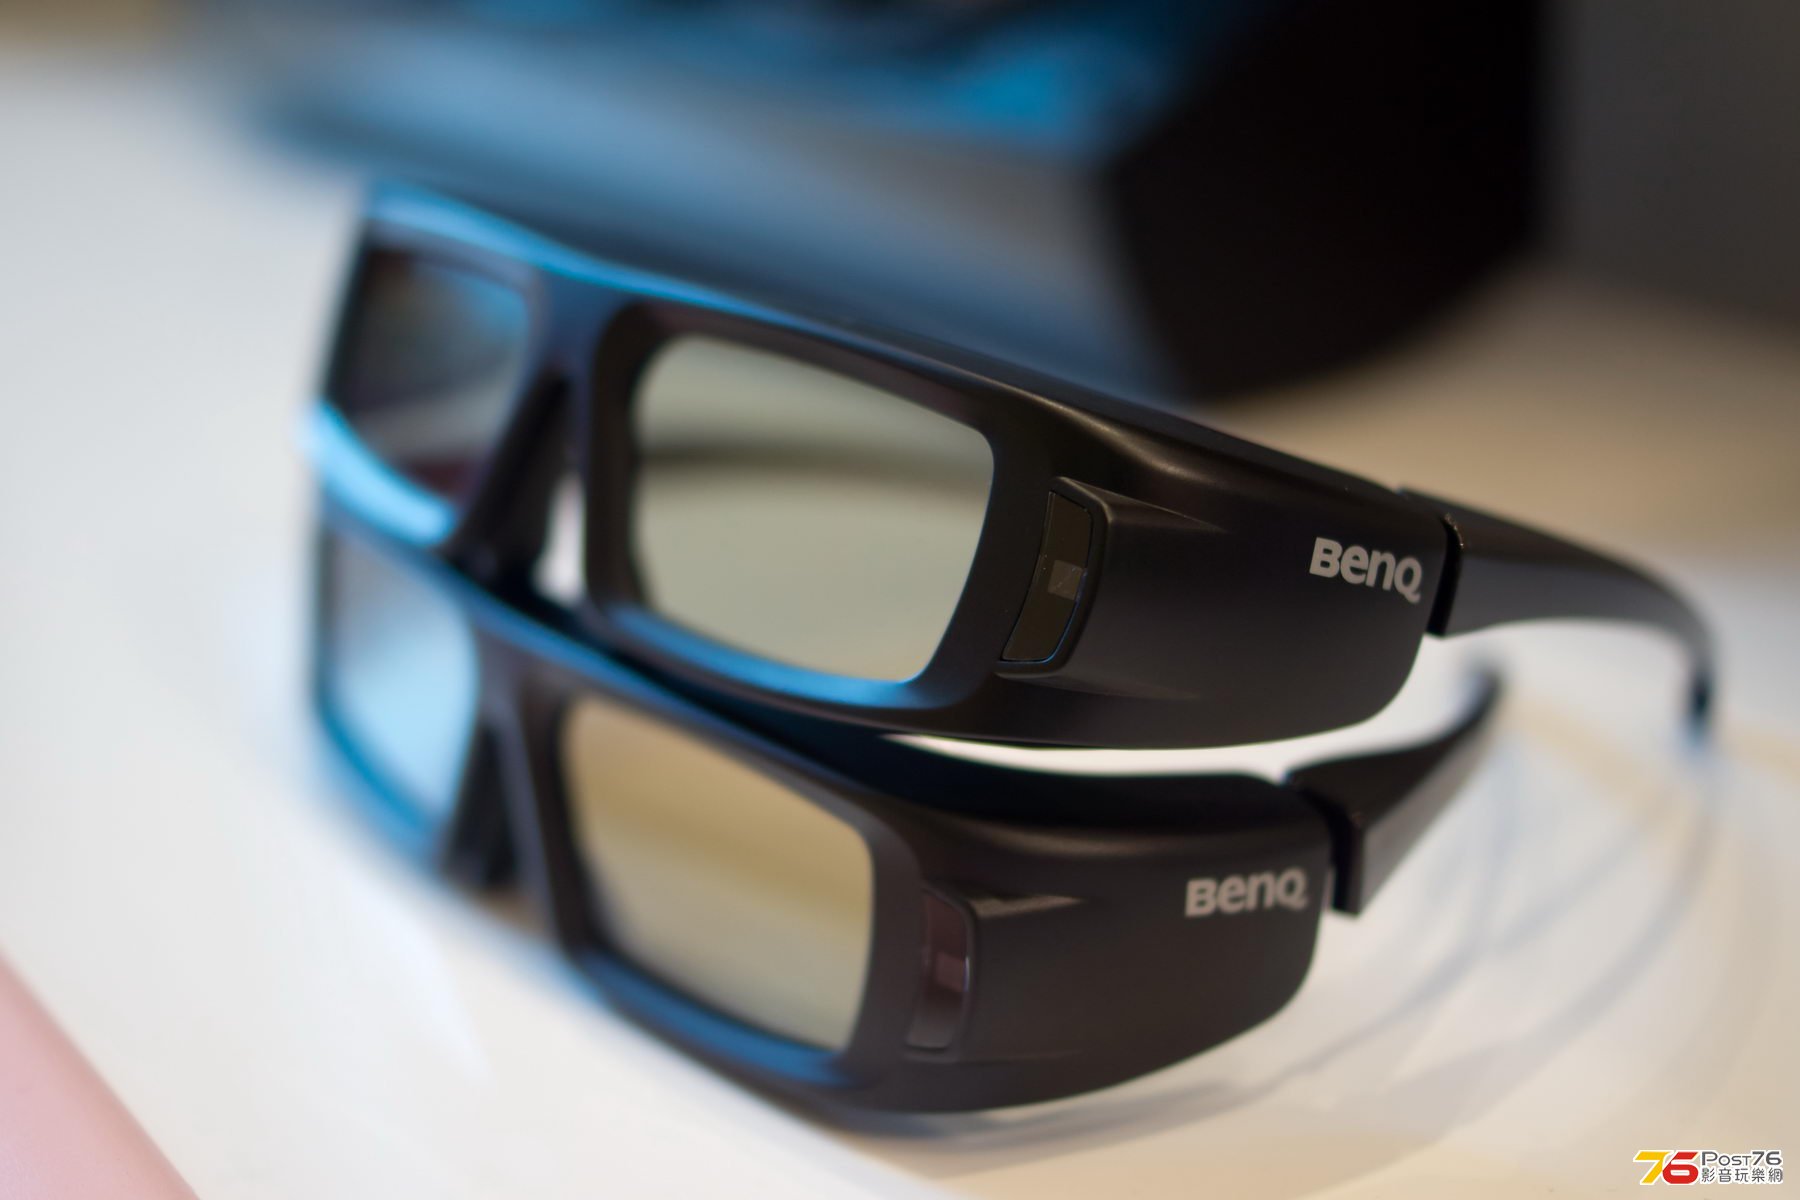 Benq 3D glasses